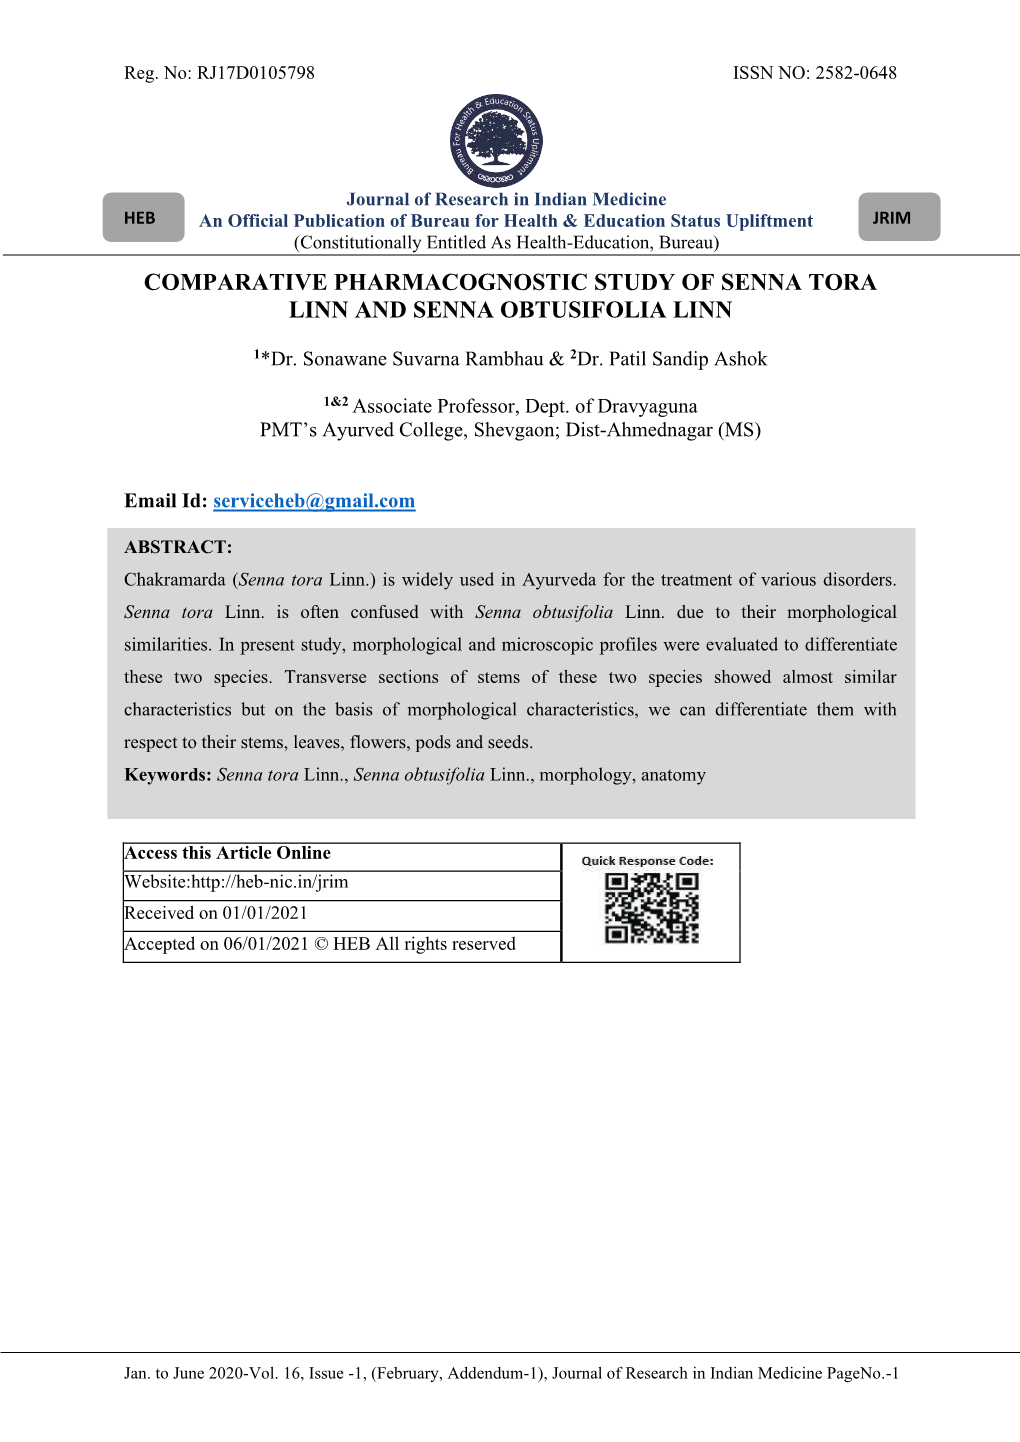 Comparative Pharmacognostic Study of Senna Tora Linn and Senna Obtusifolia Linn